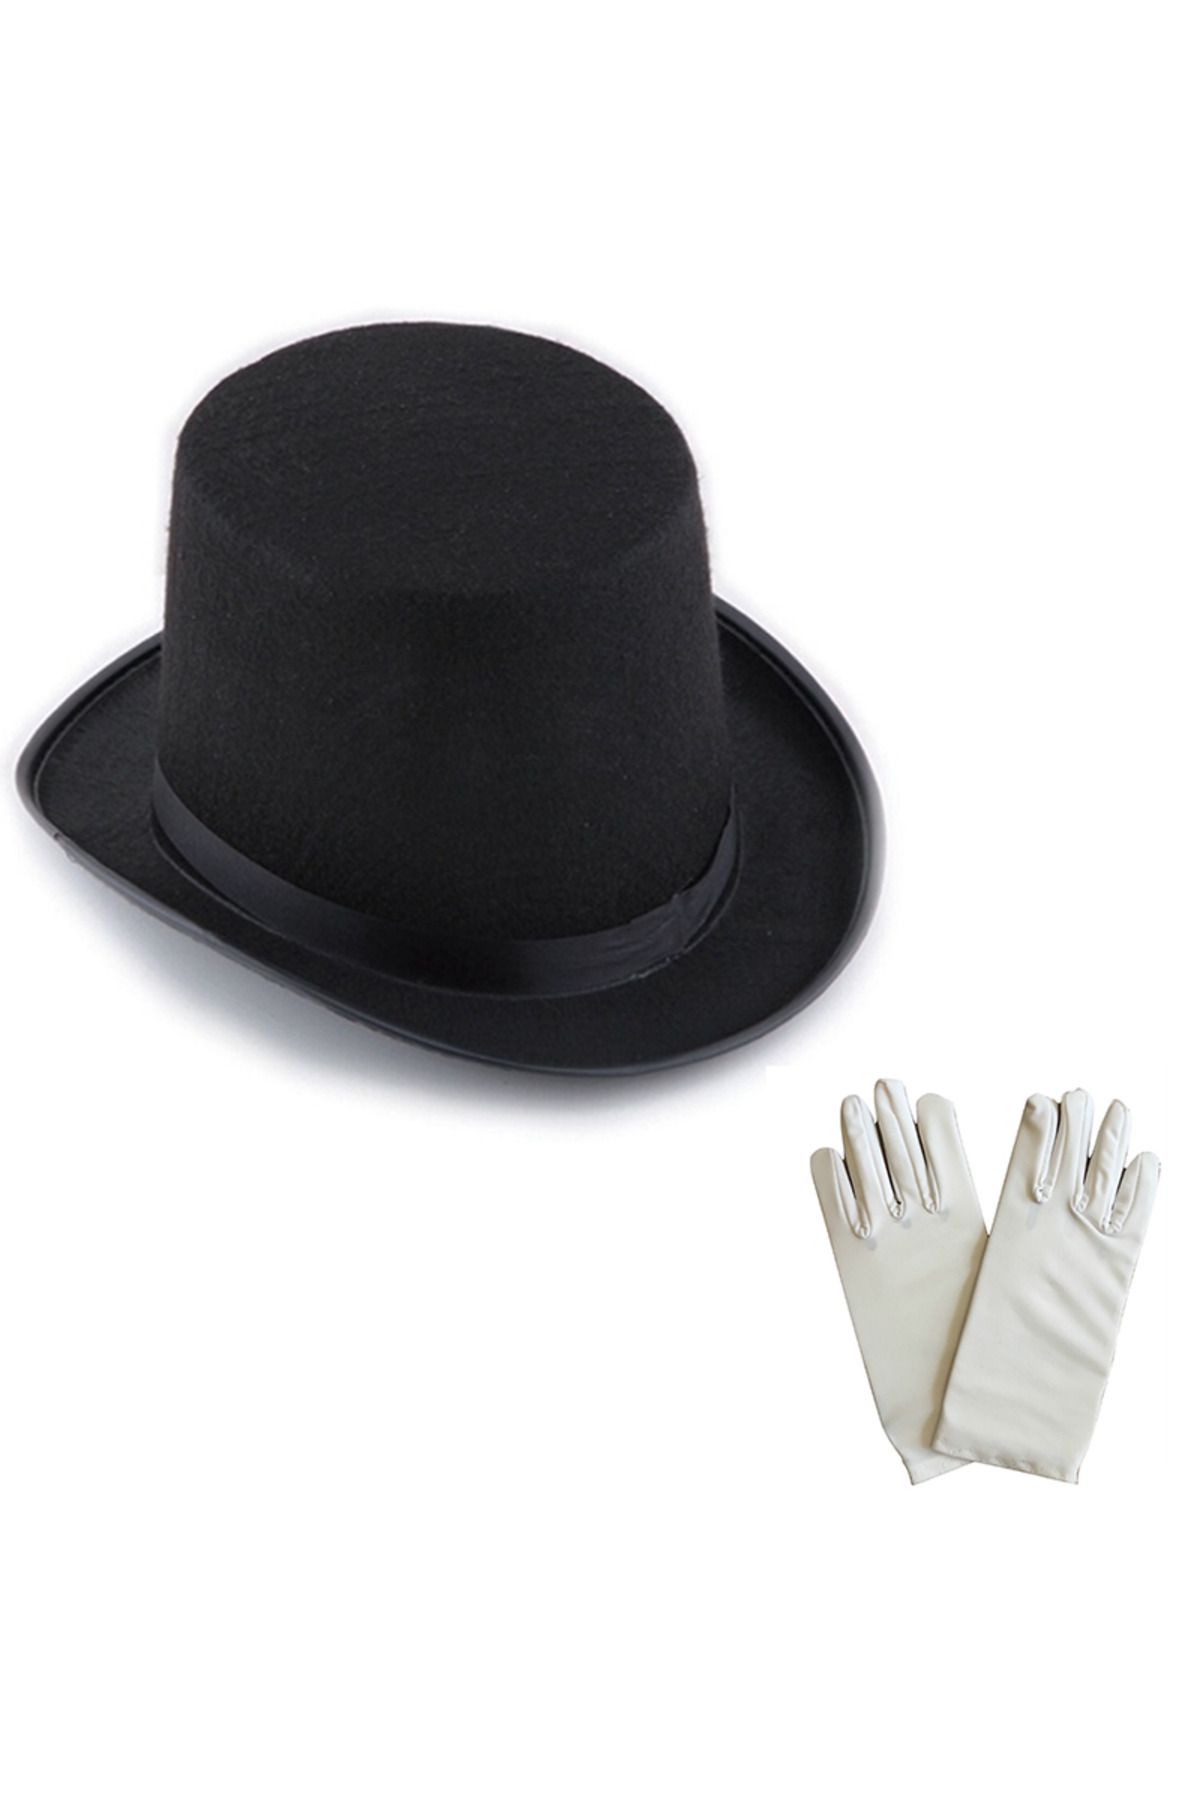 Afrodit Siyah Sihirbaz Fötr Şapka 15 cm - 1 Çift Beyaz Sihirbaz Eldiveni - Yetişkin Boy (CLZ)